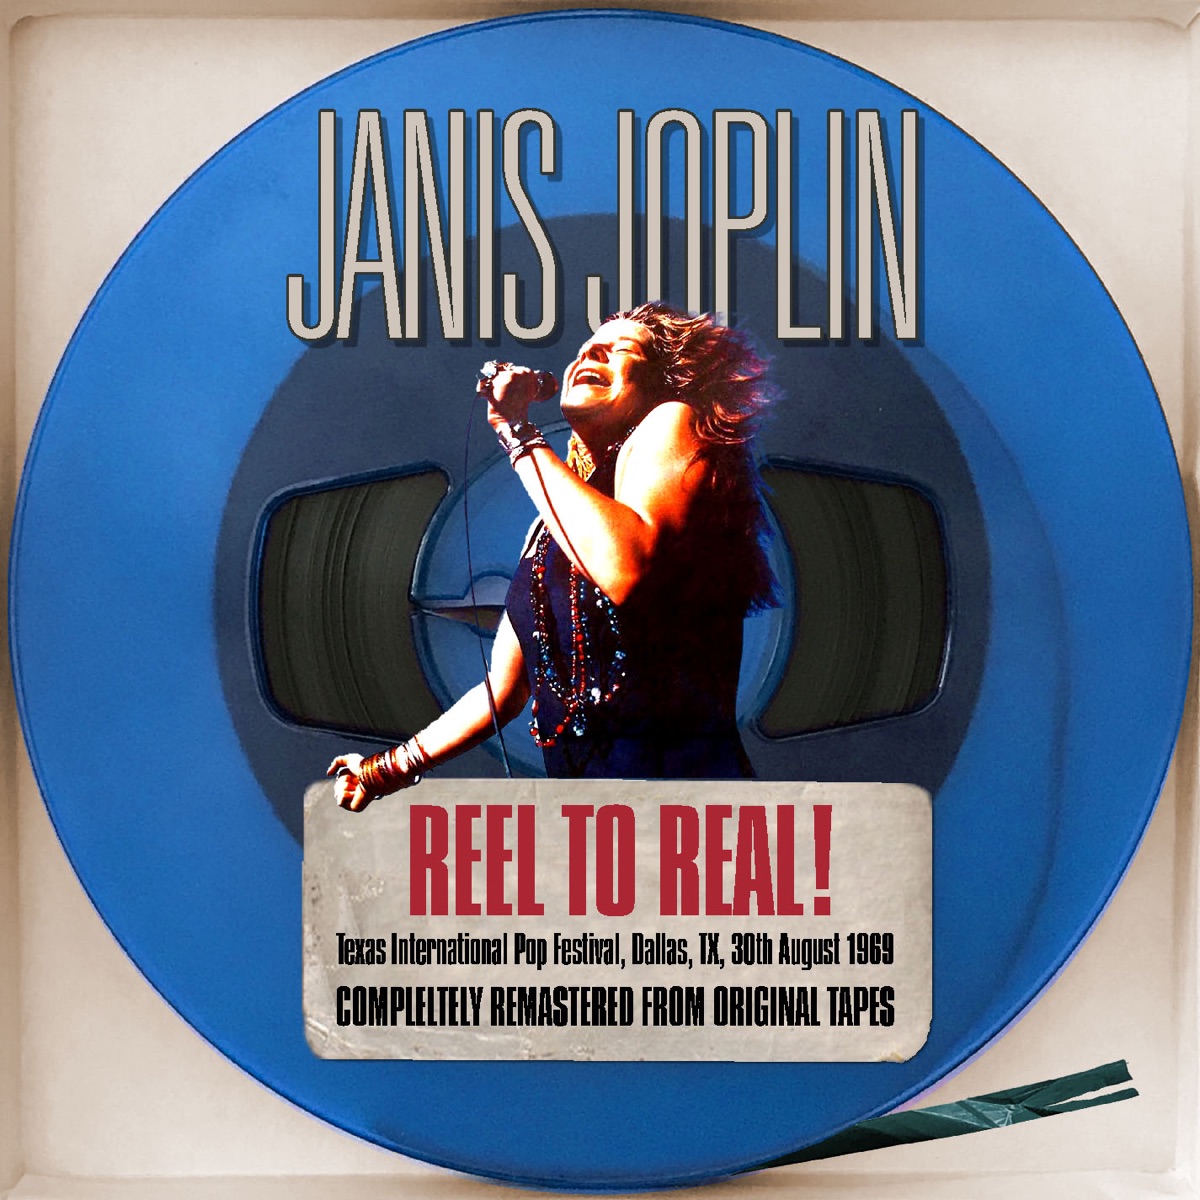 Janis Little Girl Blue (Original Motion Picture Soundtrack) by Janis Joplin on Apple Music